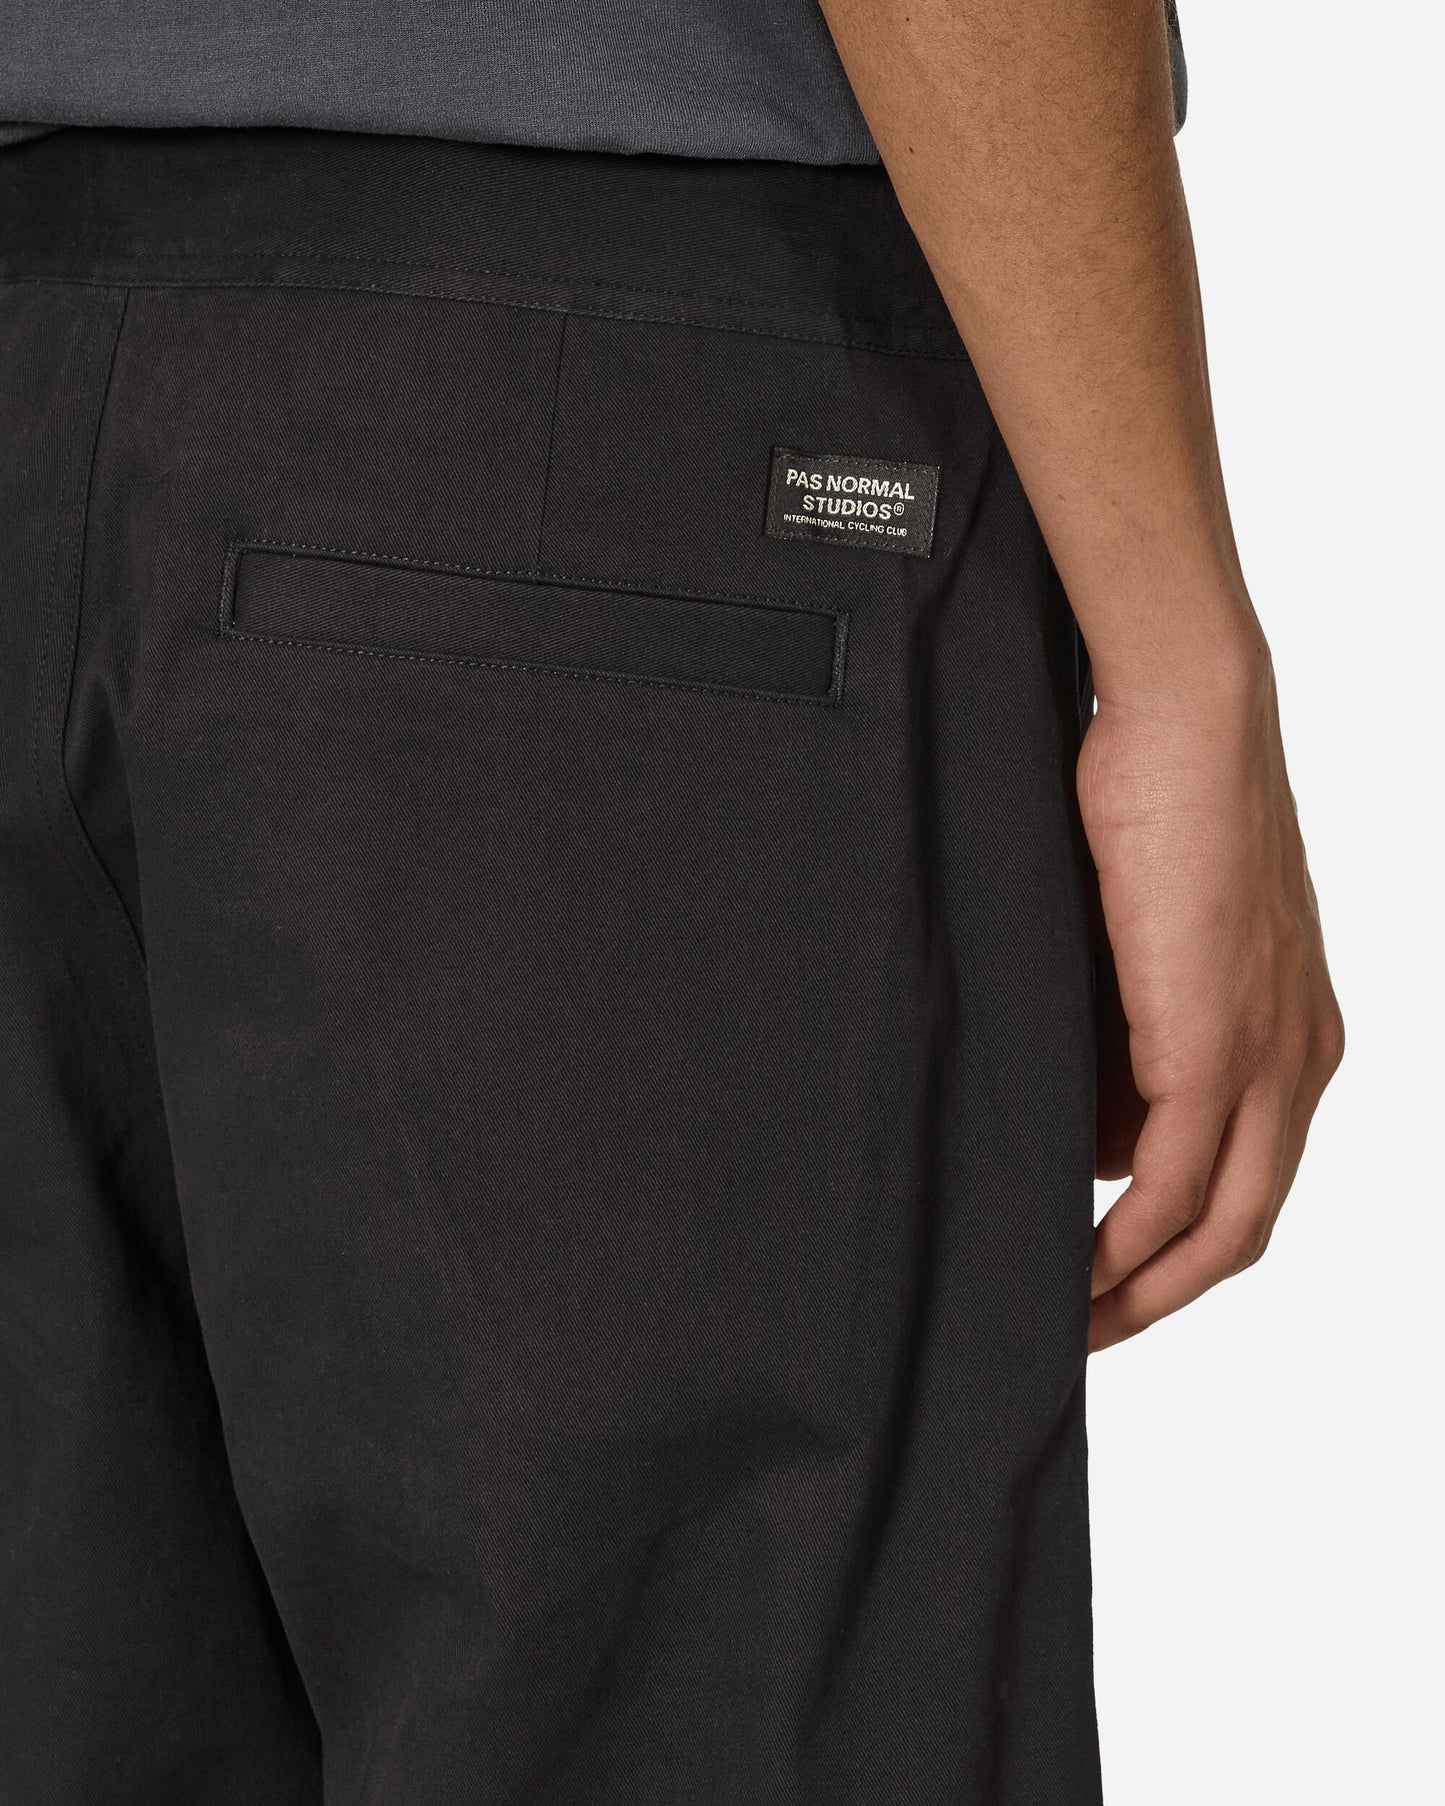 Pas Normal Studios Off-Race Cotton Twill Pants Black Pants Casual MM2021AF 2999